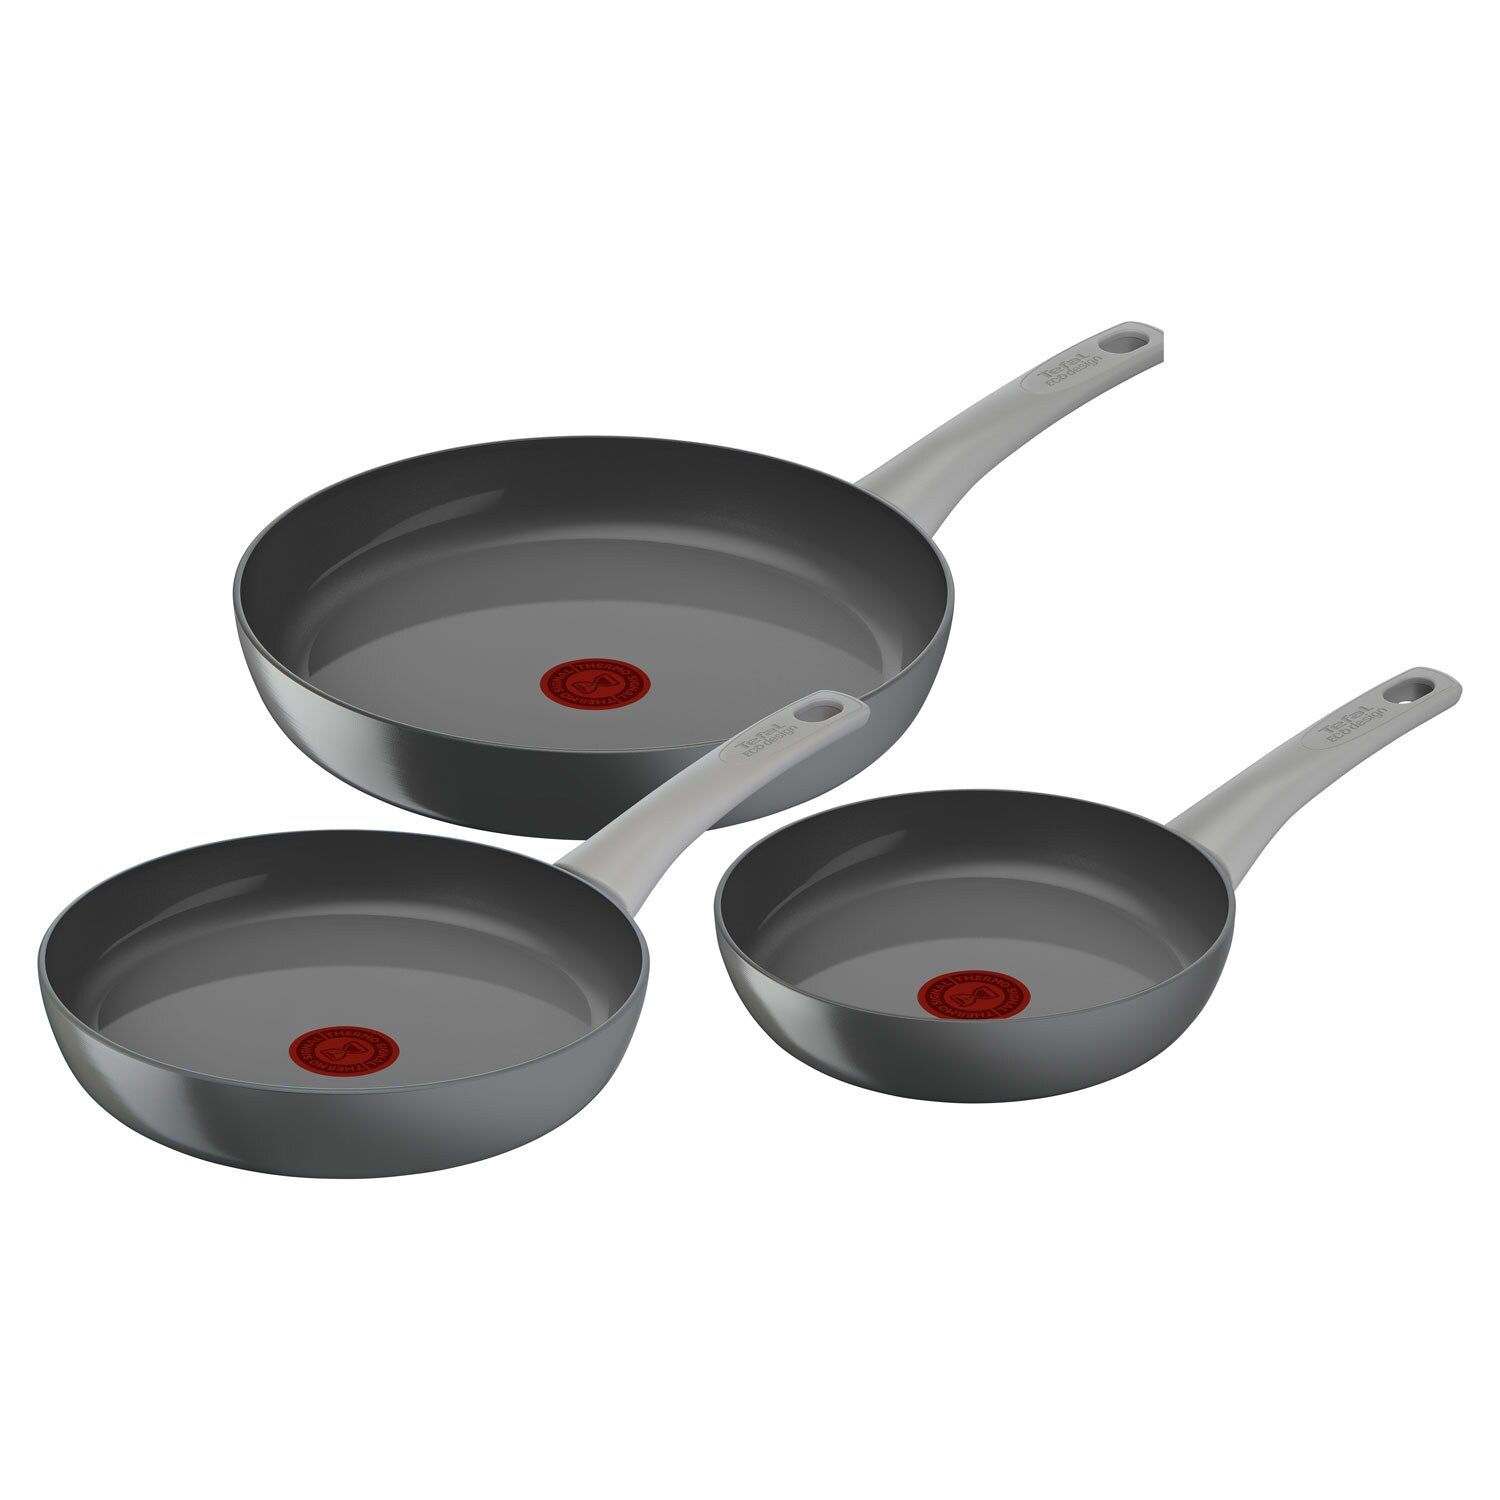 Renew ON Frying Pan, RoyalDesign 3 - Tefal Pieces 